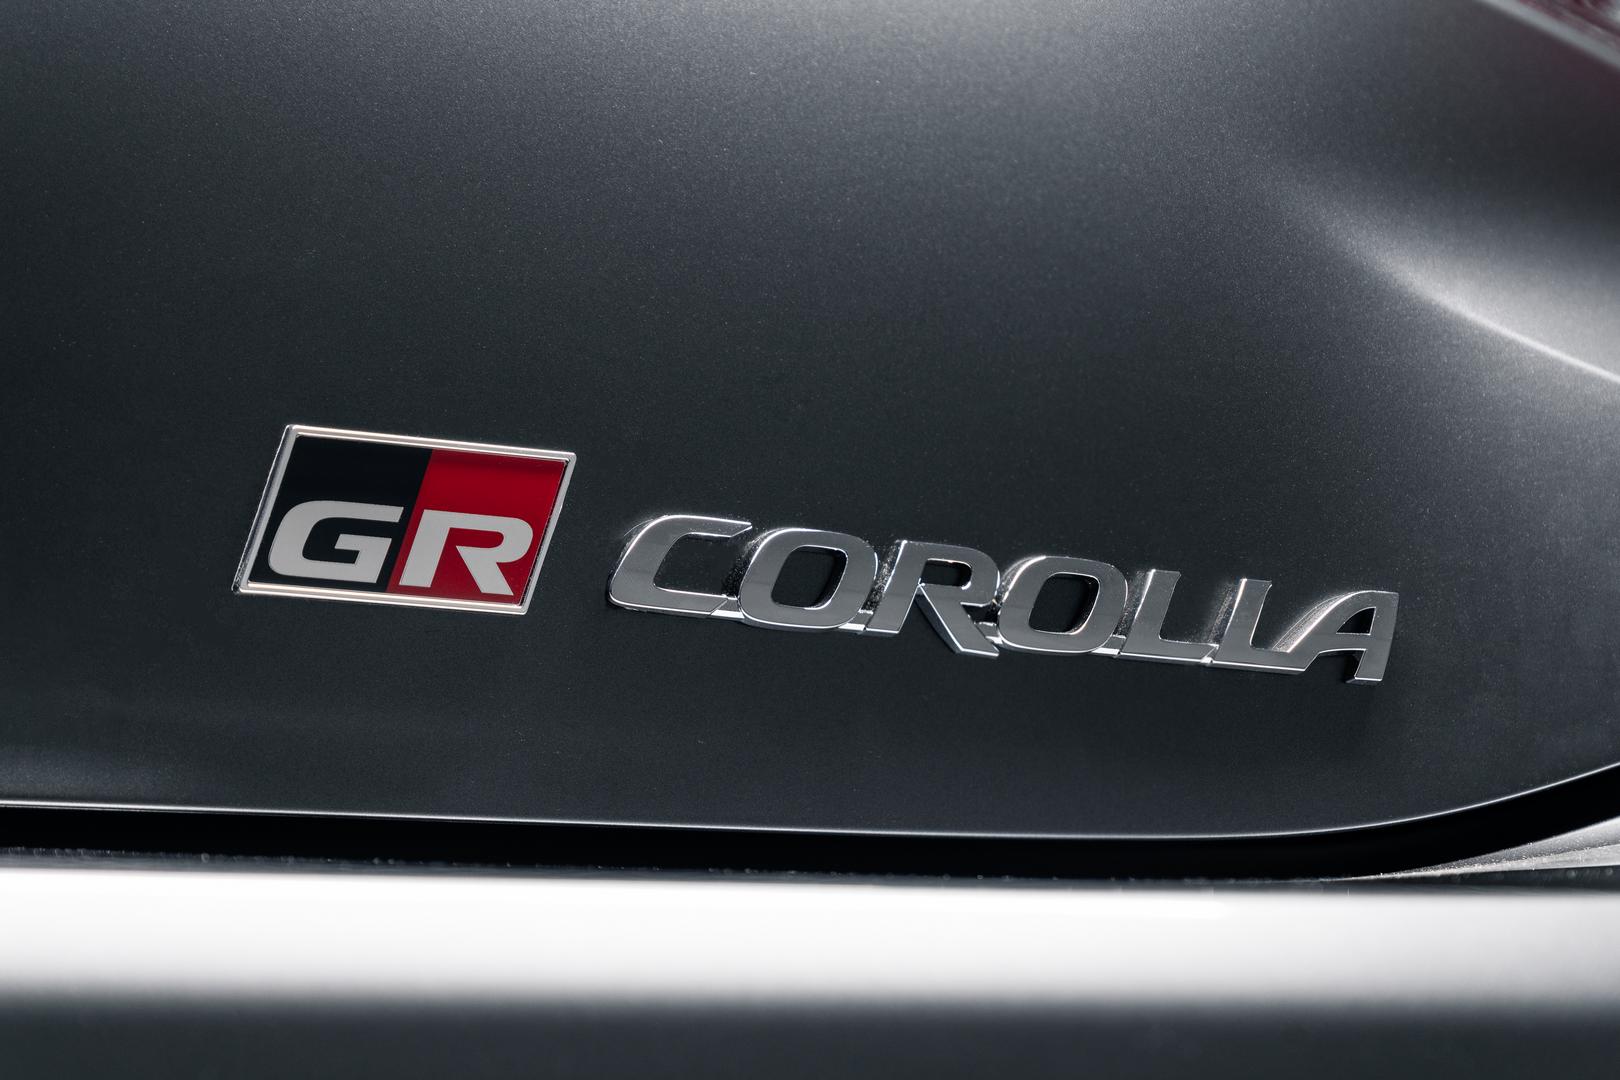 GR Corolla badge